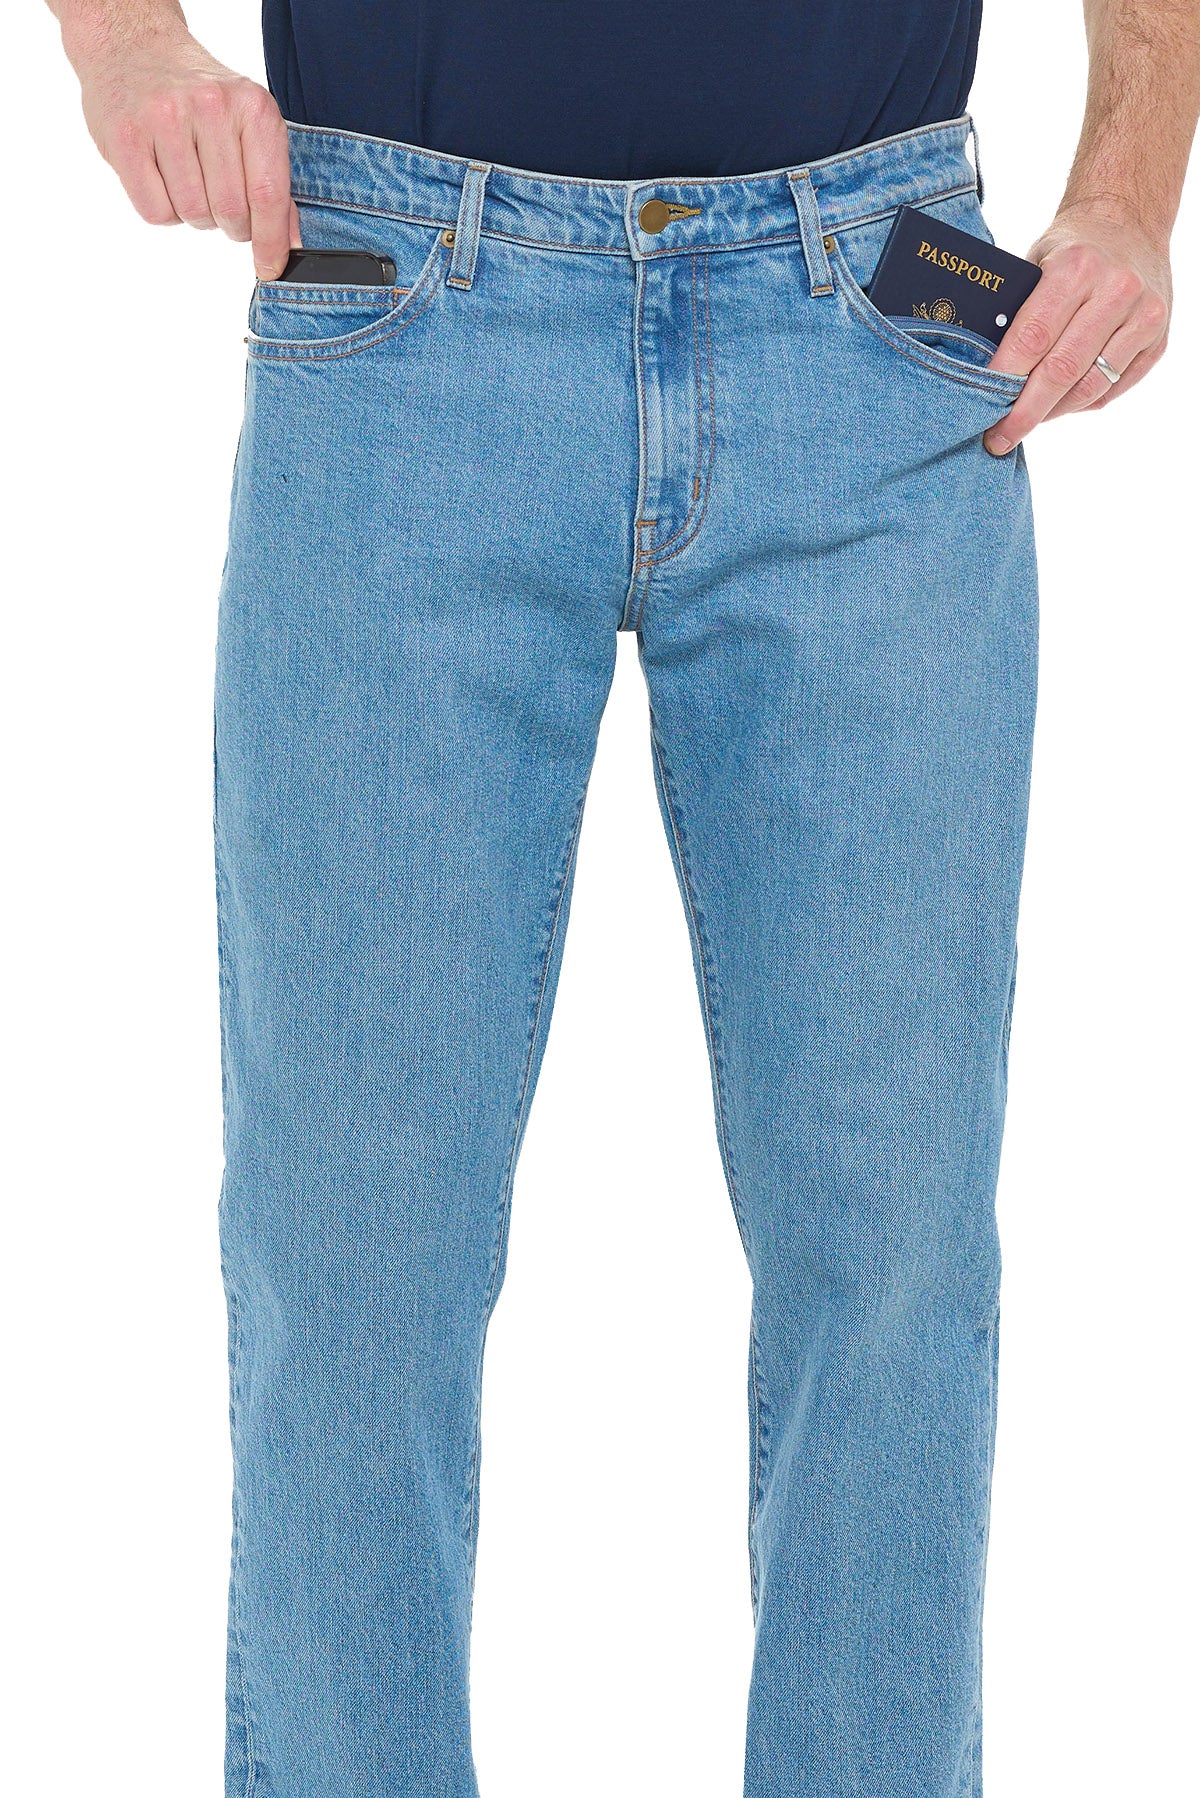 Aviator travel jeans for men in faded indigo showcasing pickpocket prevention capabilities